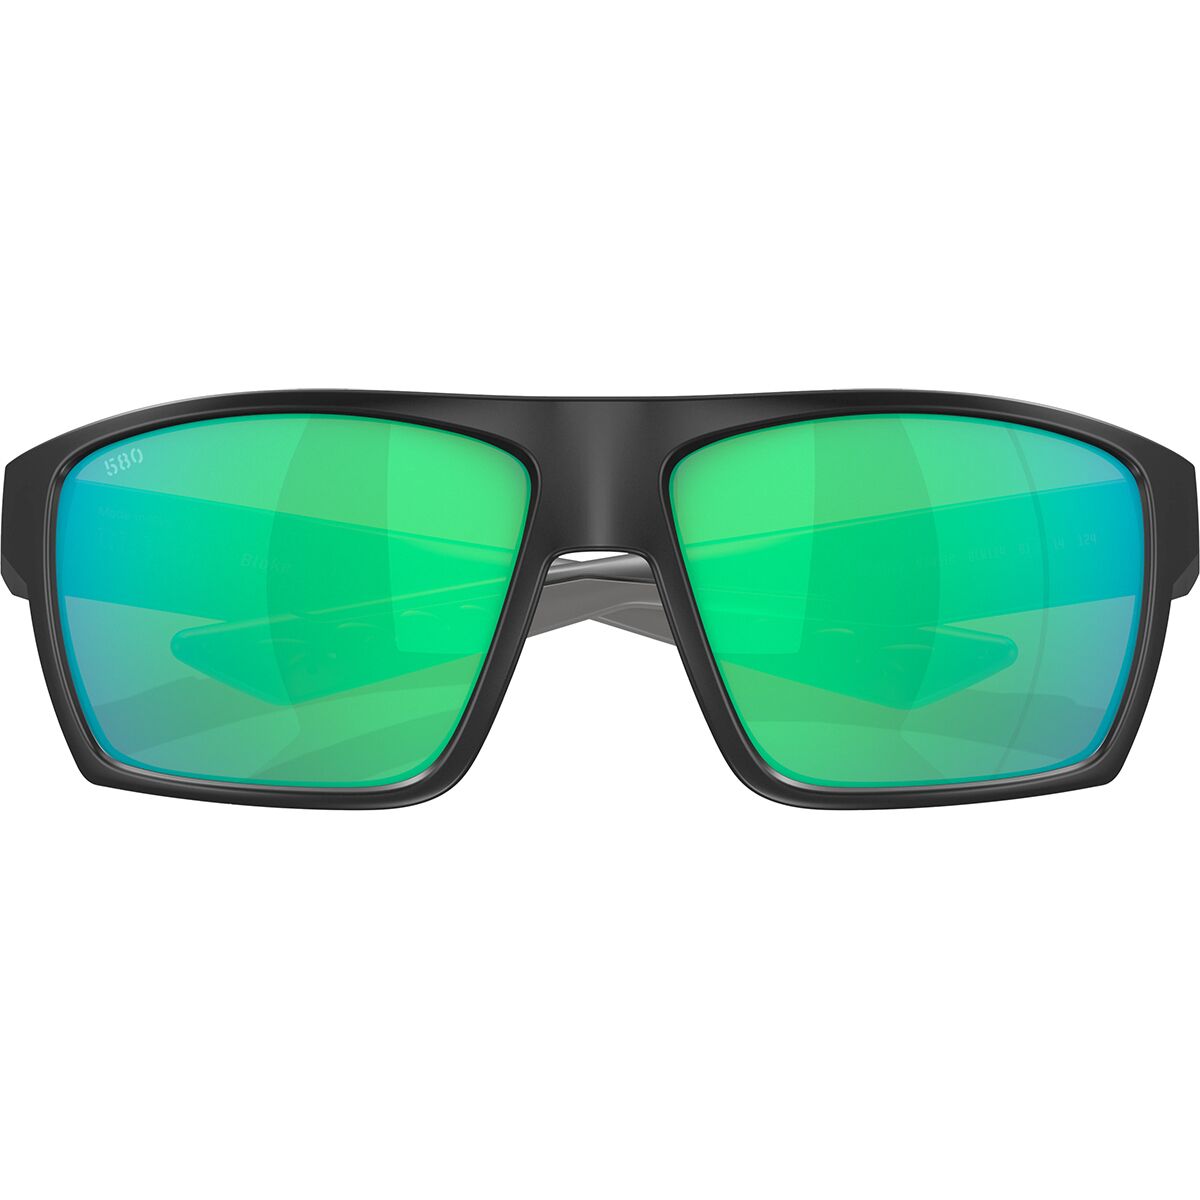 Costa Bloke 580G Polarized Sunglasses - Men